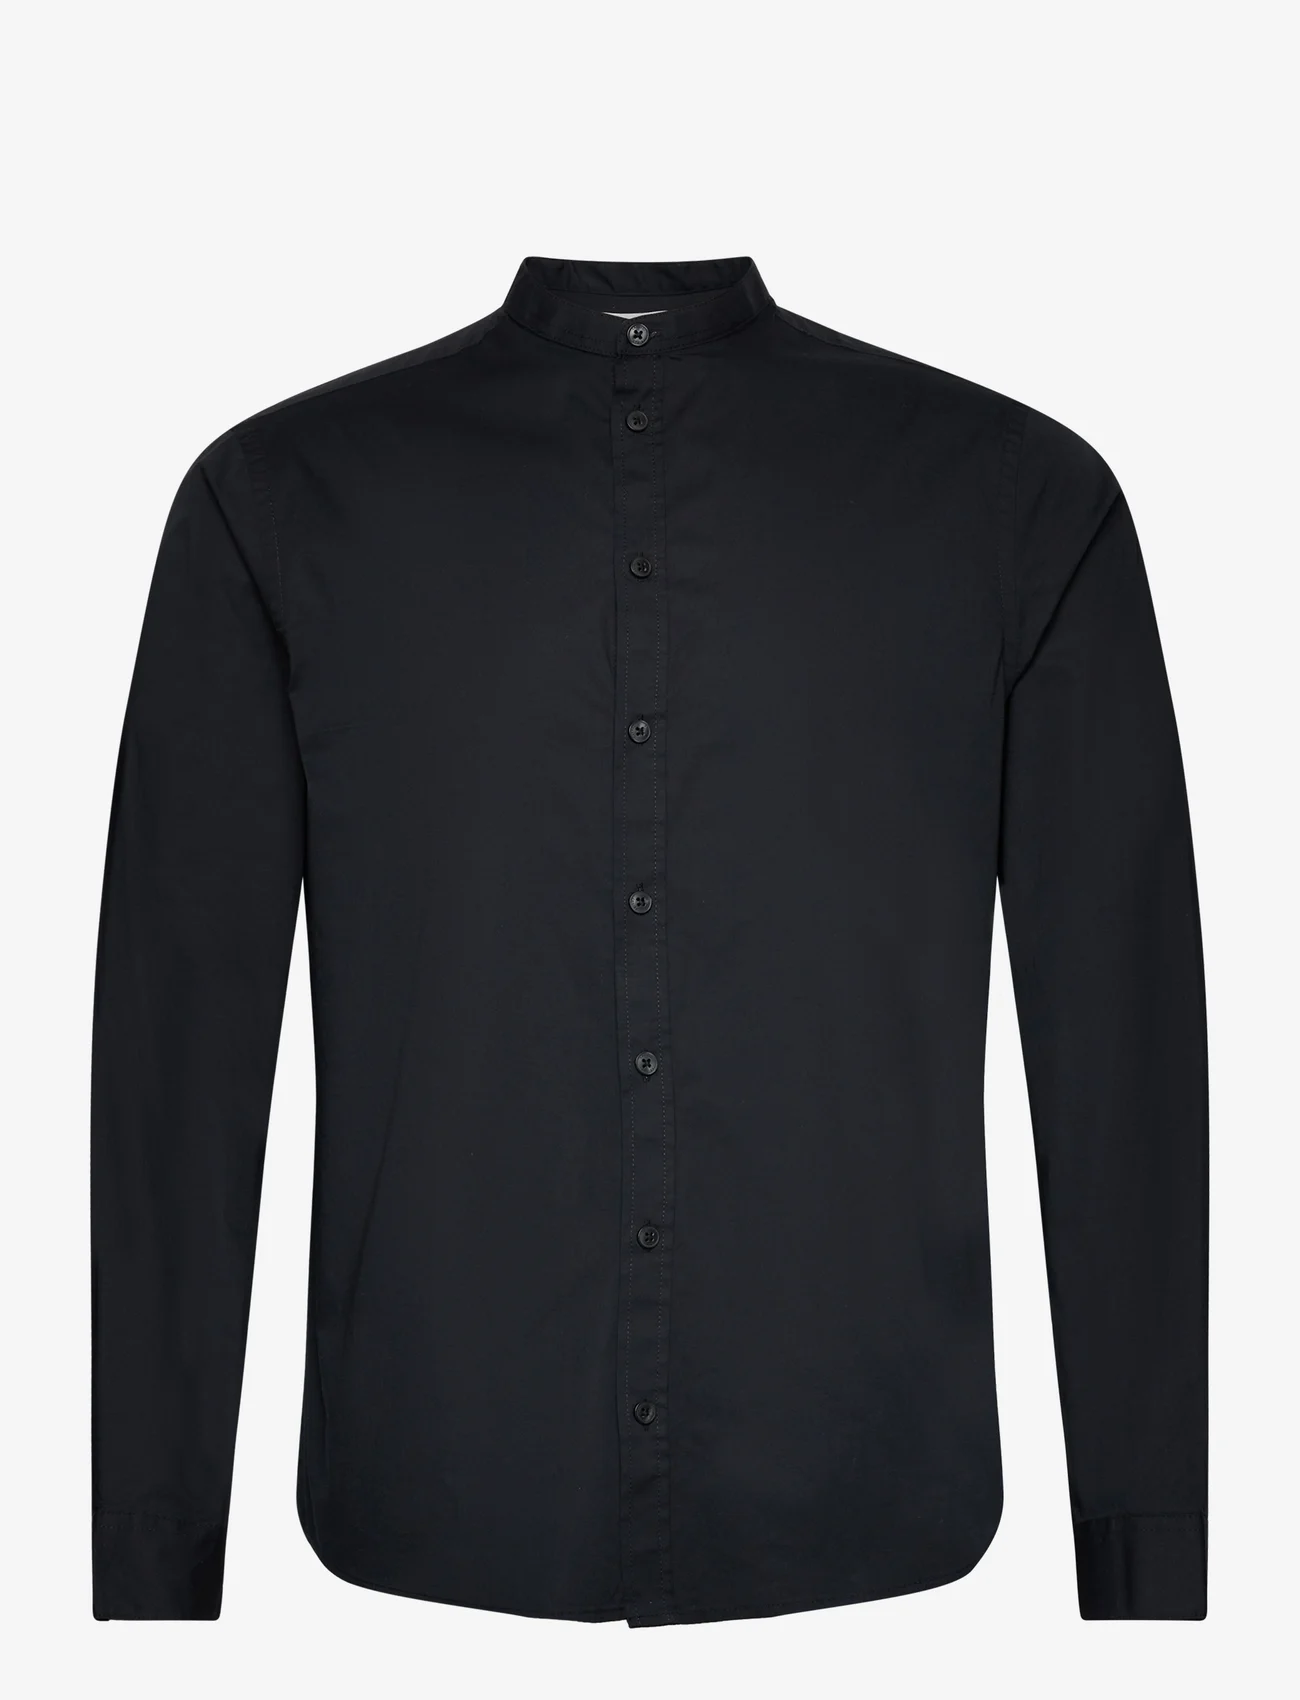 Casual Friday - CFAnton LS CC stretch shirt - basic shirts - black - 0